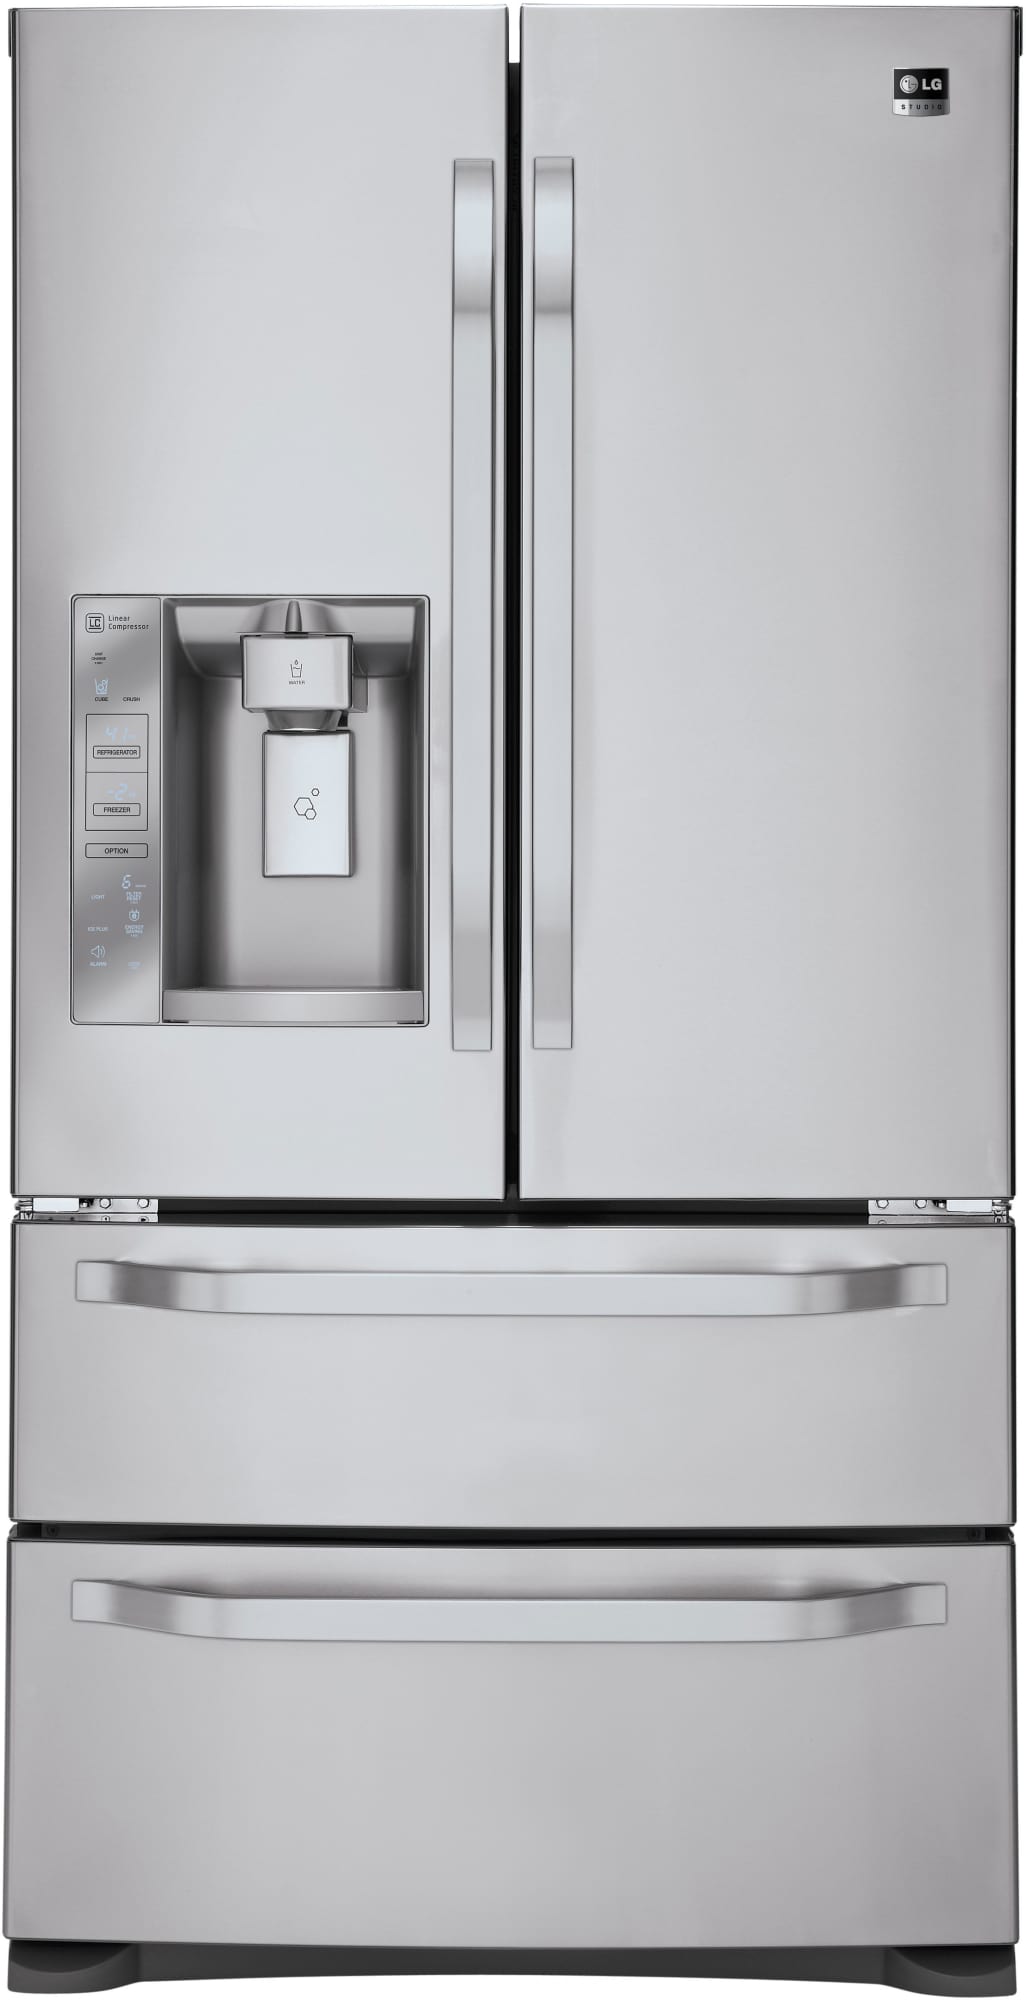 LG LSMX211ST 20.5 cu. ft. 4-Door French Door Refrigerator with SpacePlus Ice System